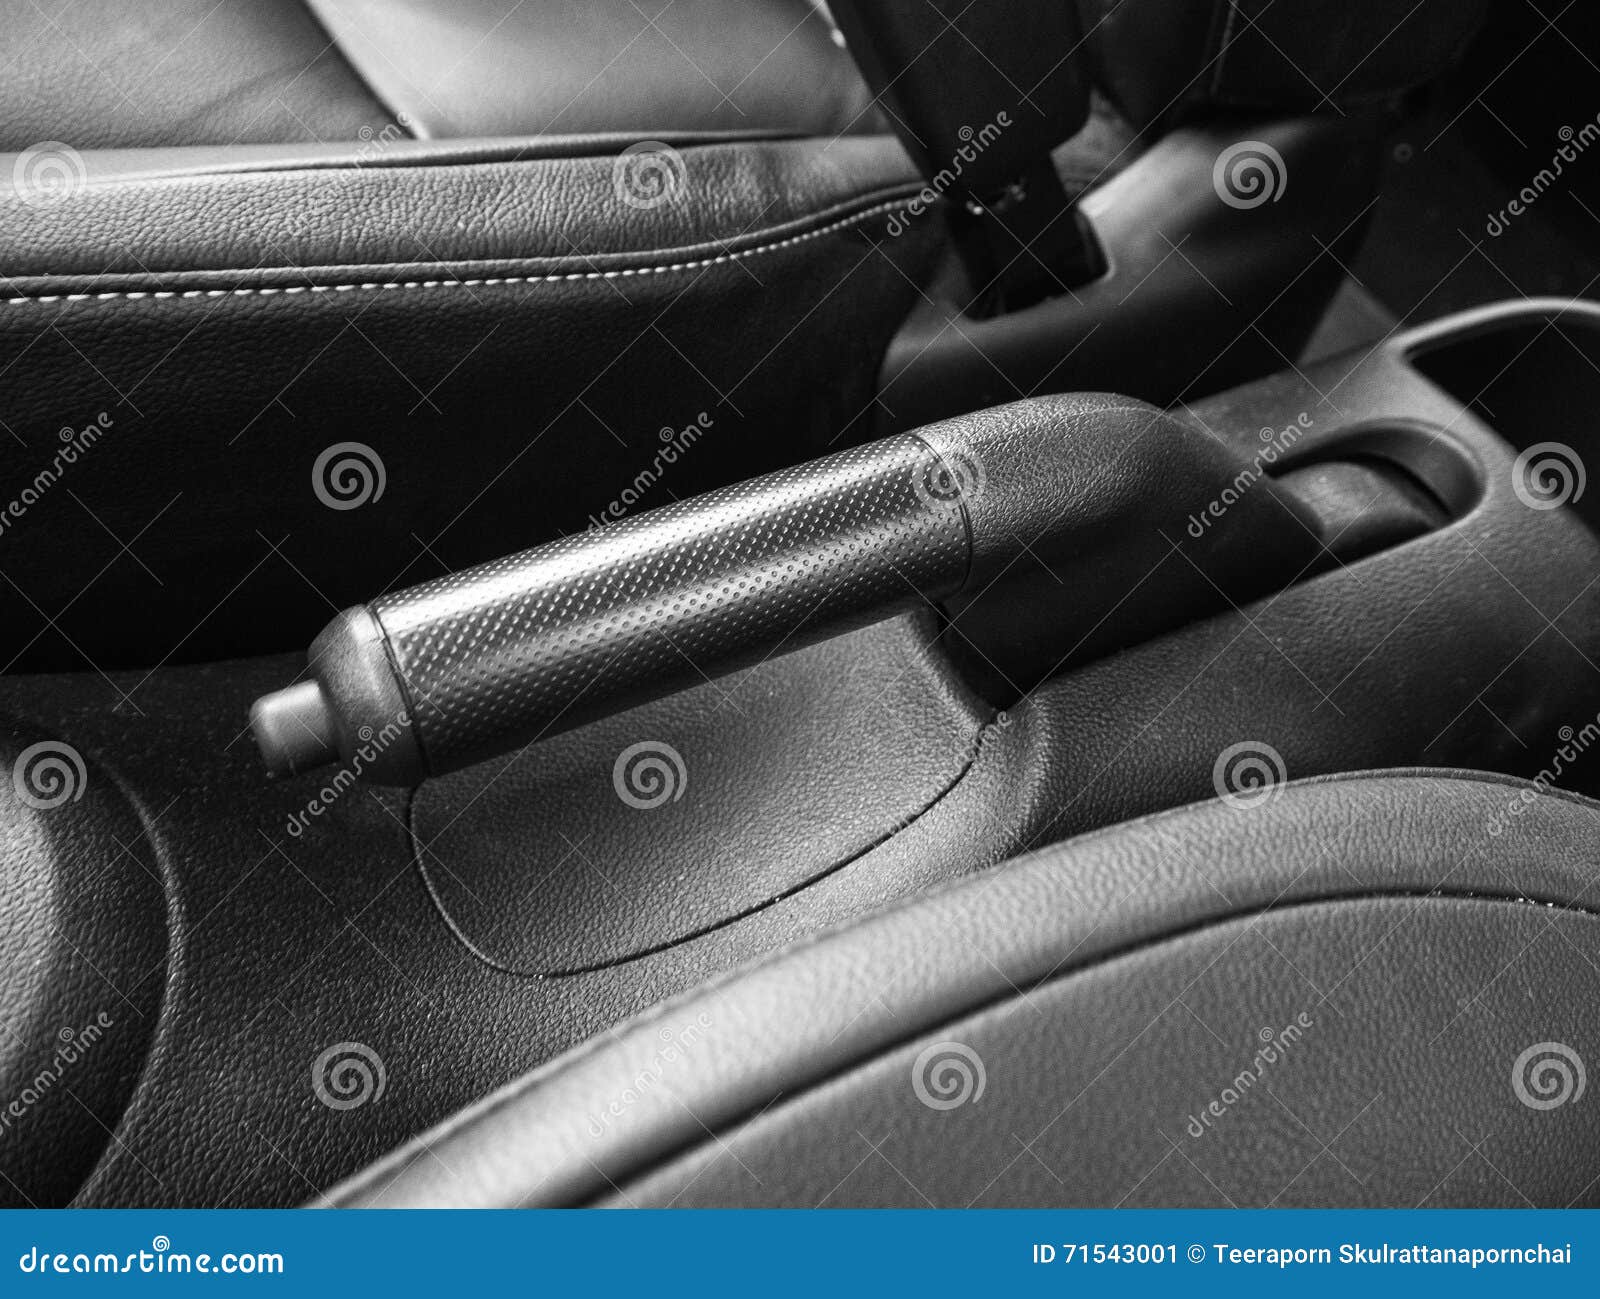 Dusver Berg kleding op zwaan Parking Brake Handbrake in Automatic Car Stock Image - Image of land,  indoors: 71543001